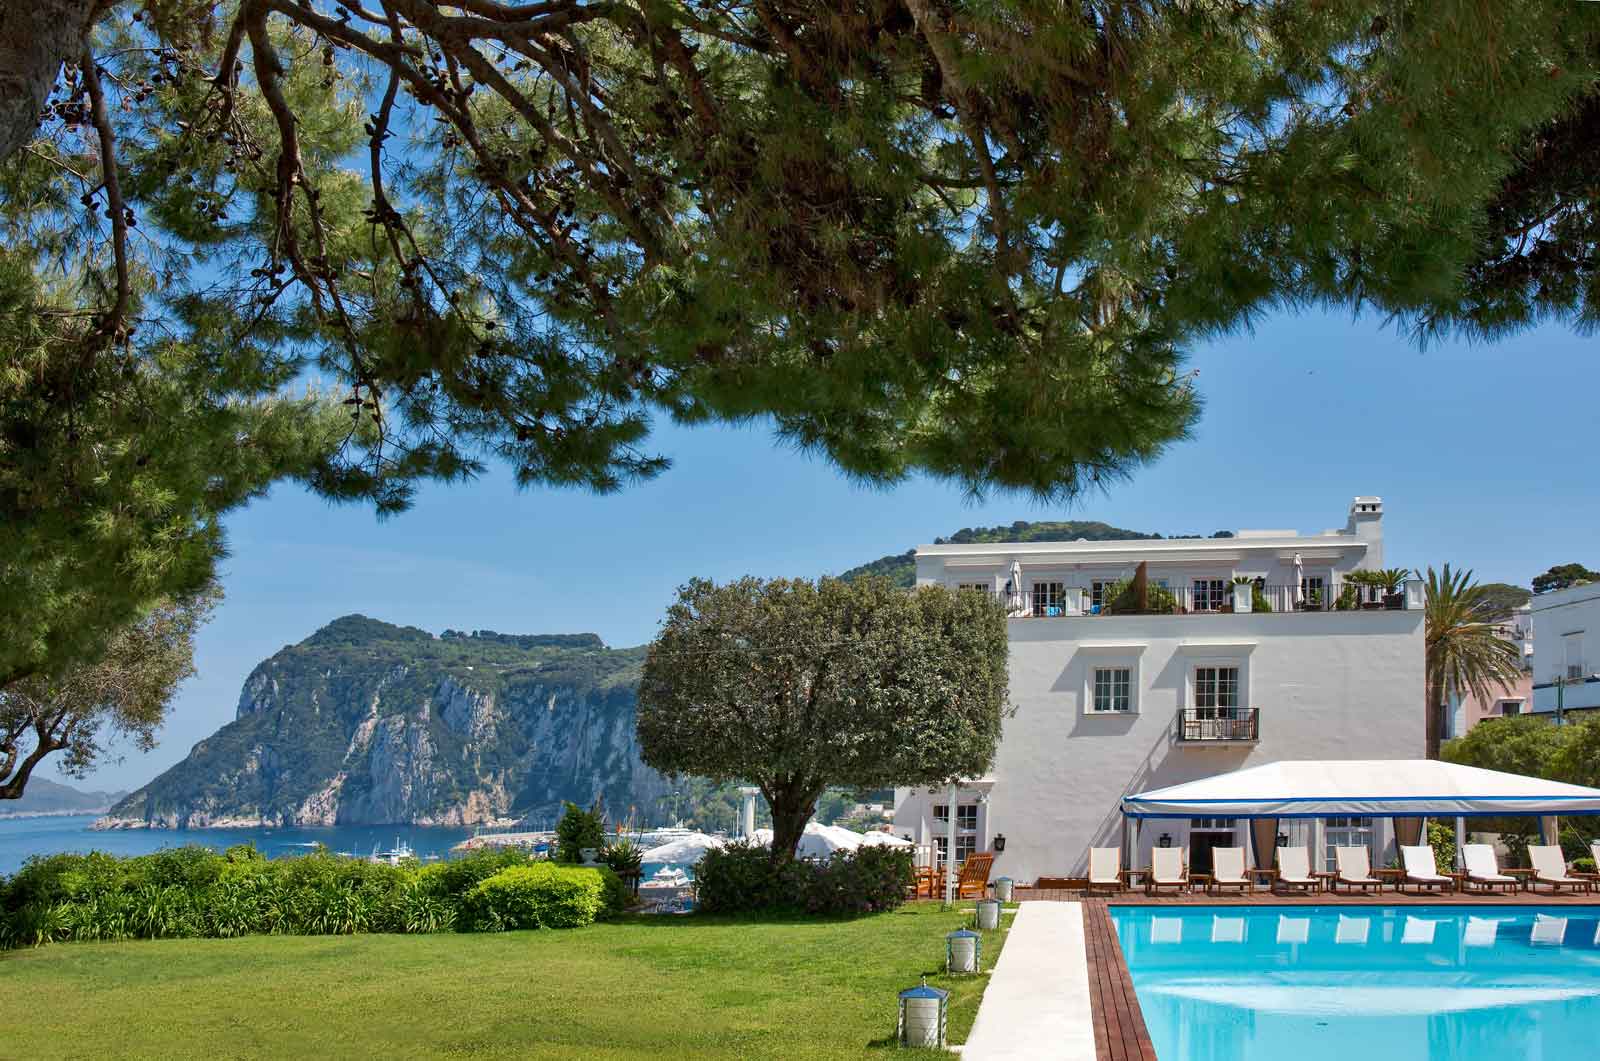 JK Place Capri Luxury Hotel Sea View - Best Hotels Capri